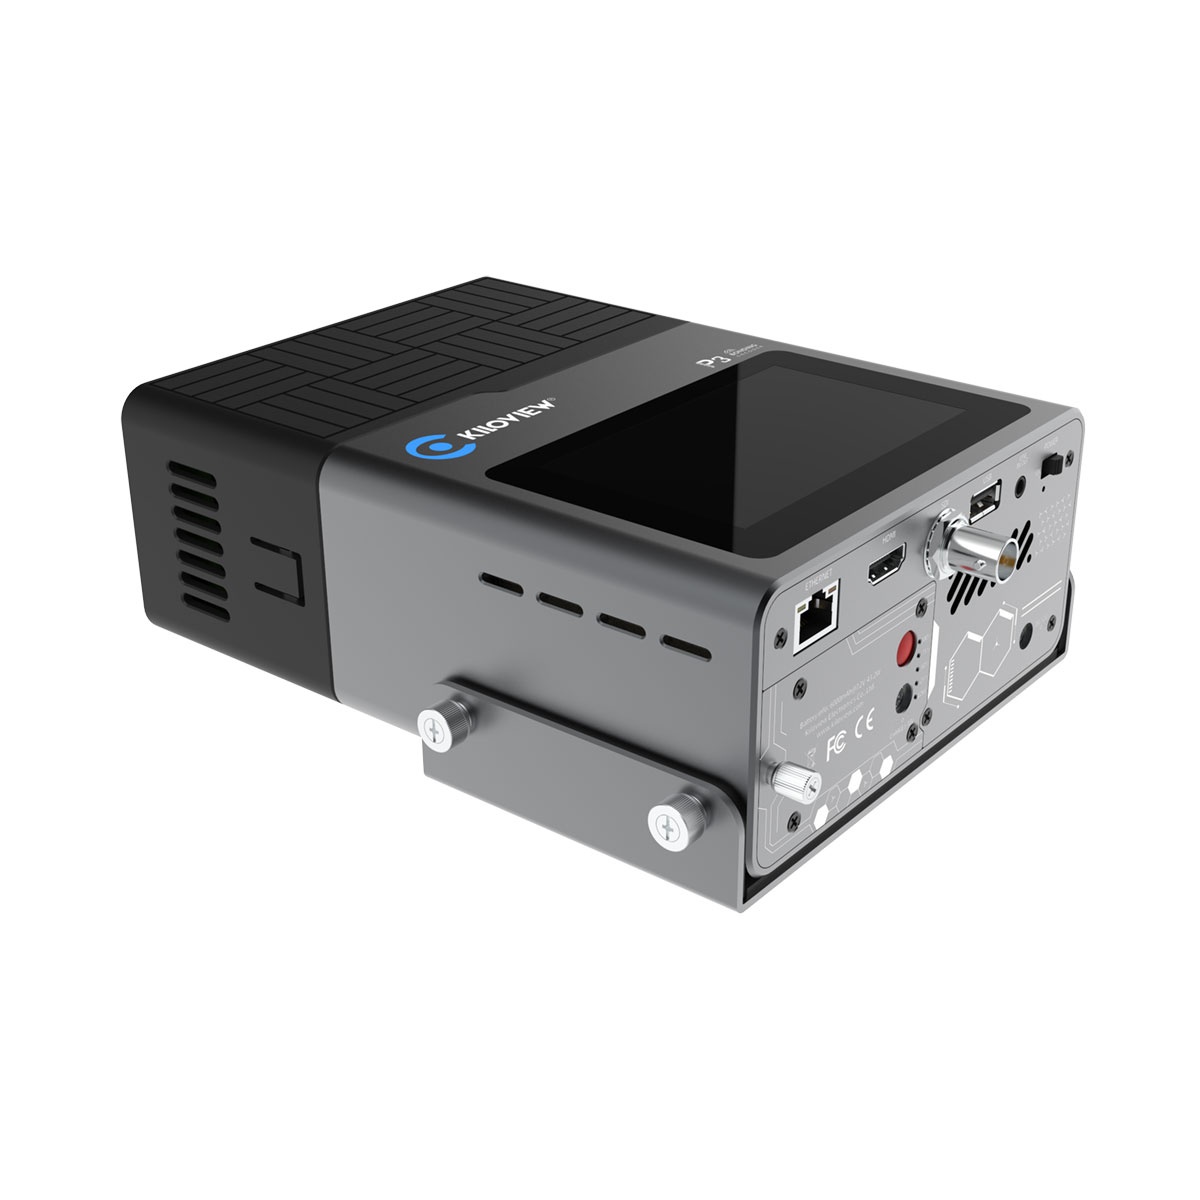 Kiloview P3 -professional 5G LTE Bonding SDI/HDMI Video Encoder for Outdoor Live broadcast